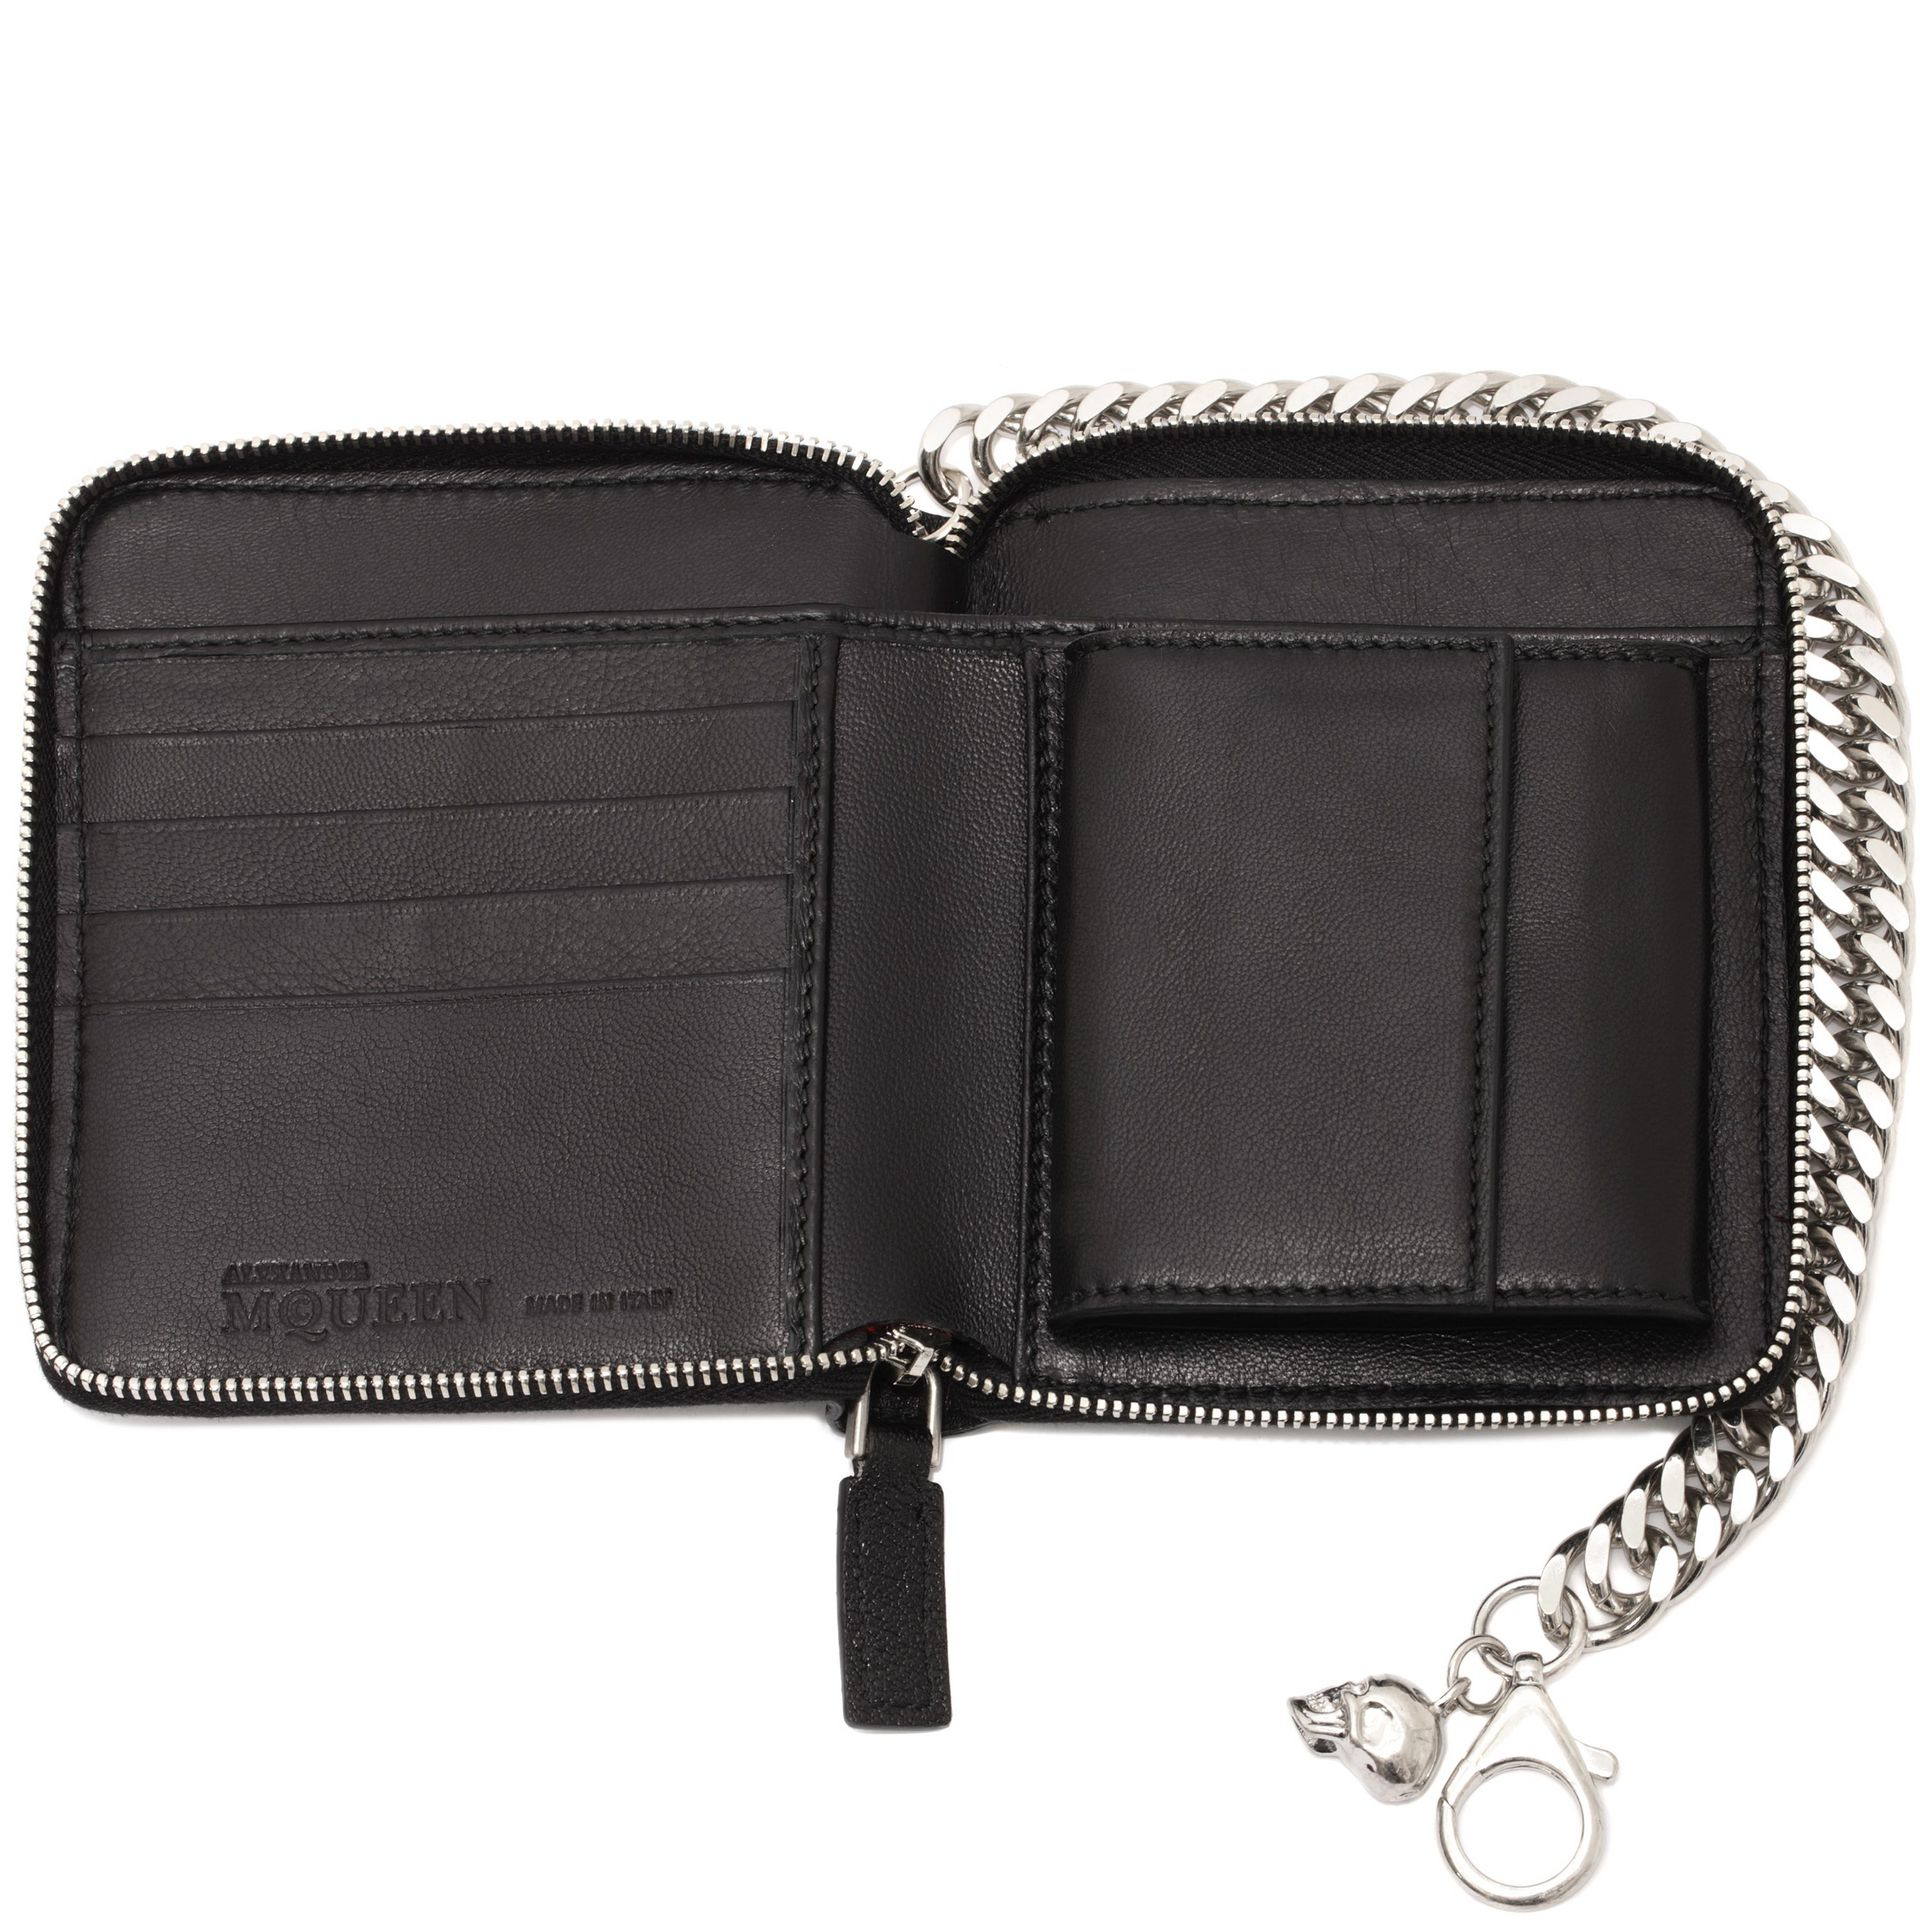 Alexander mcqueen Leather Chain Wallet in Black | Lyst